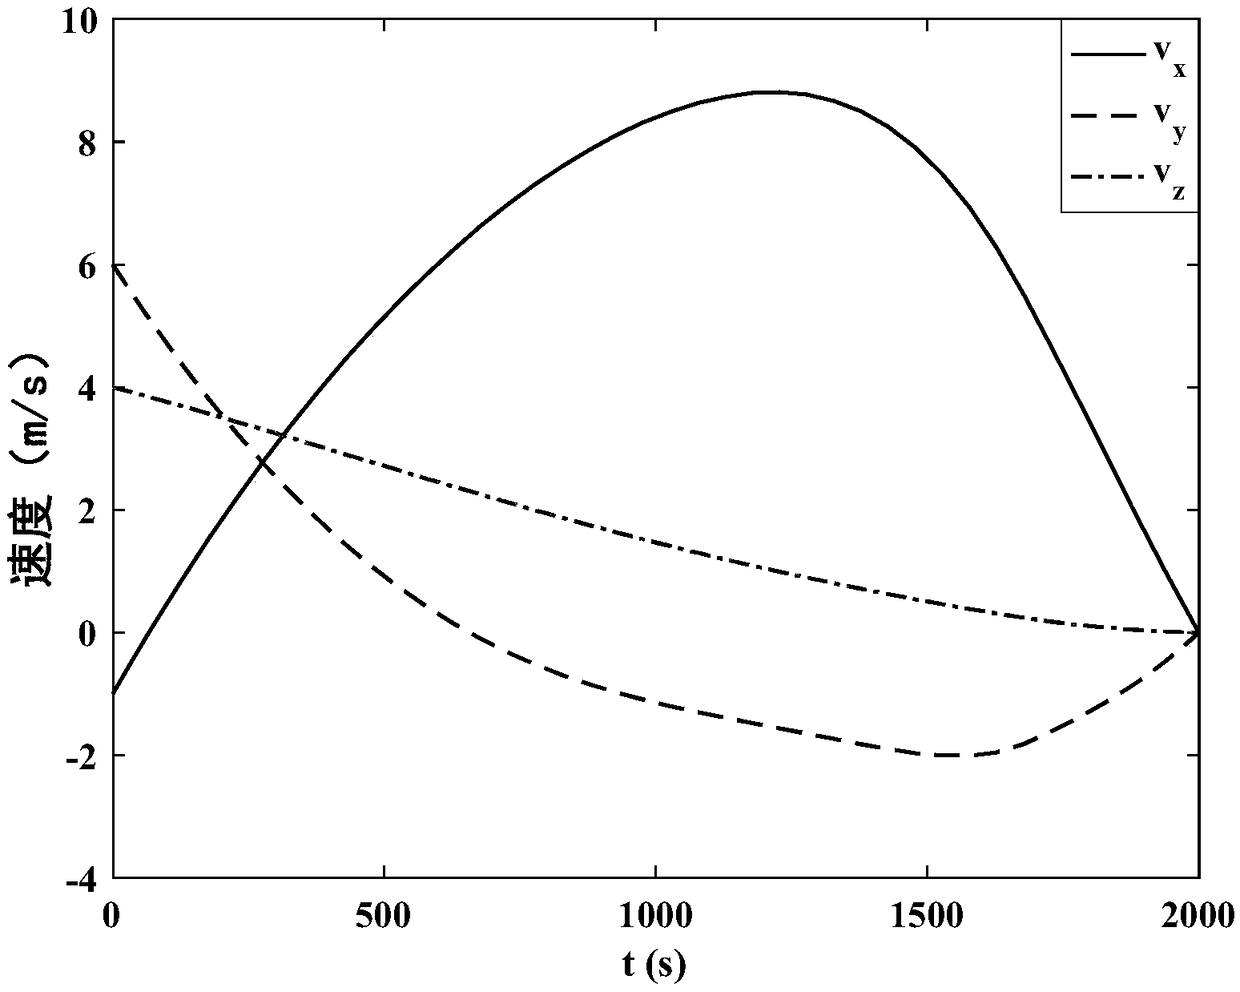 Covariant initial value determination method for optimal landing track design